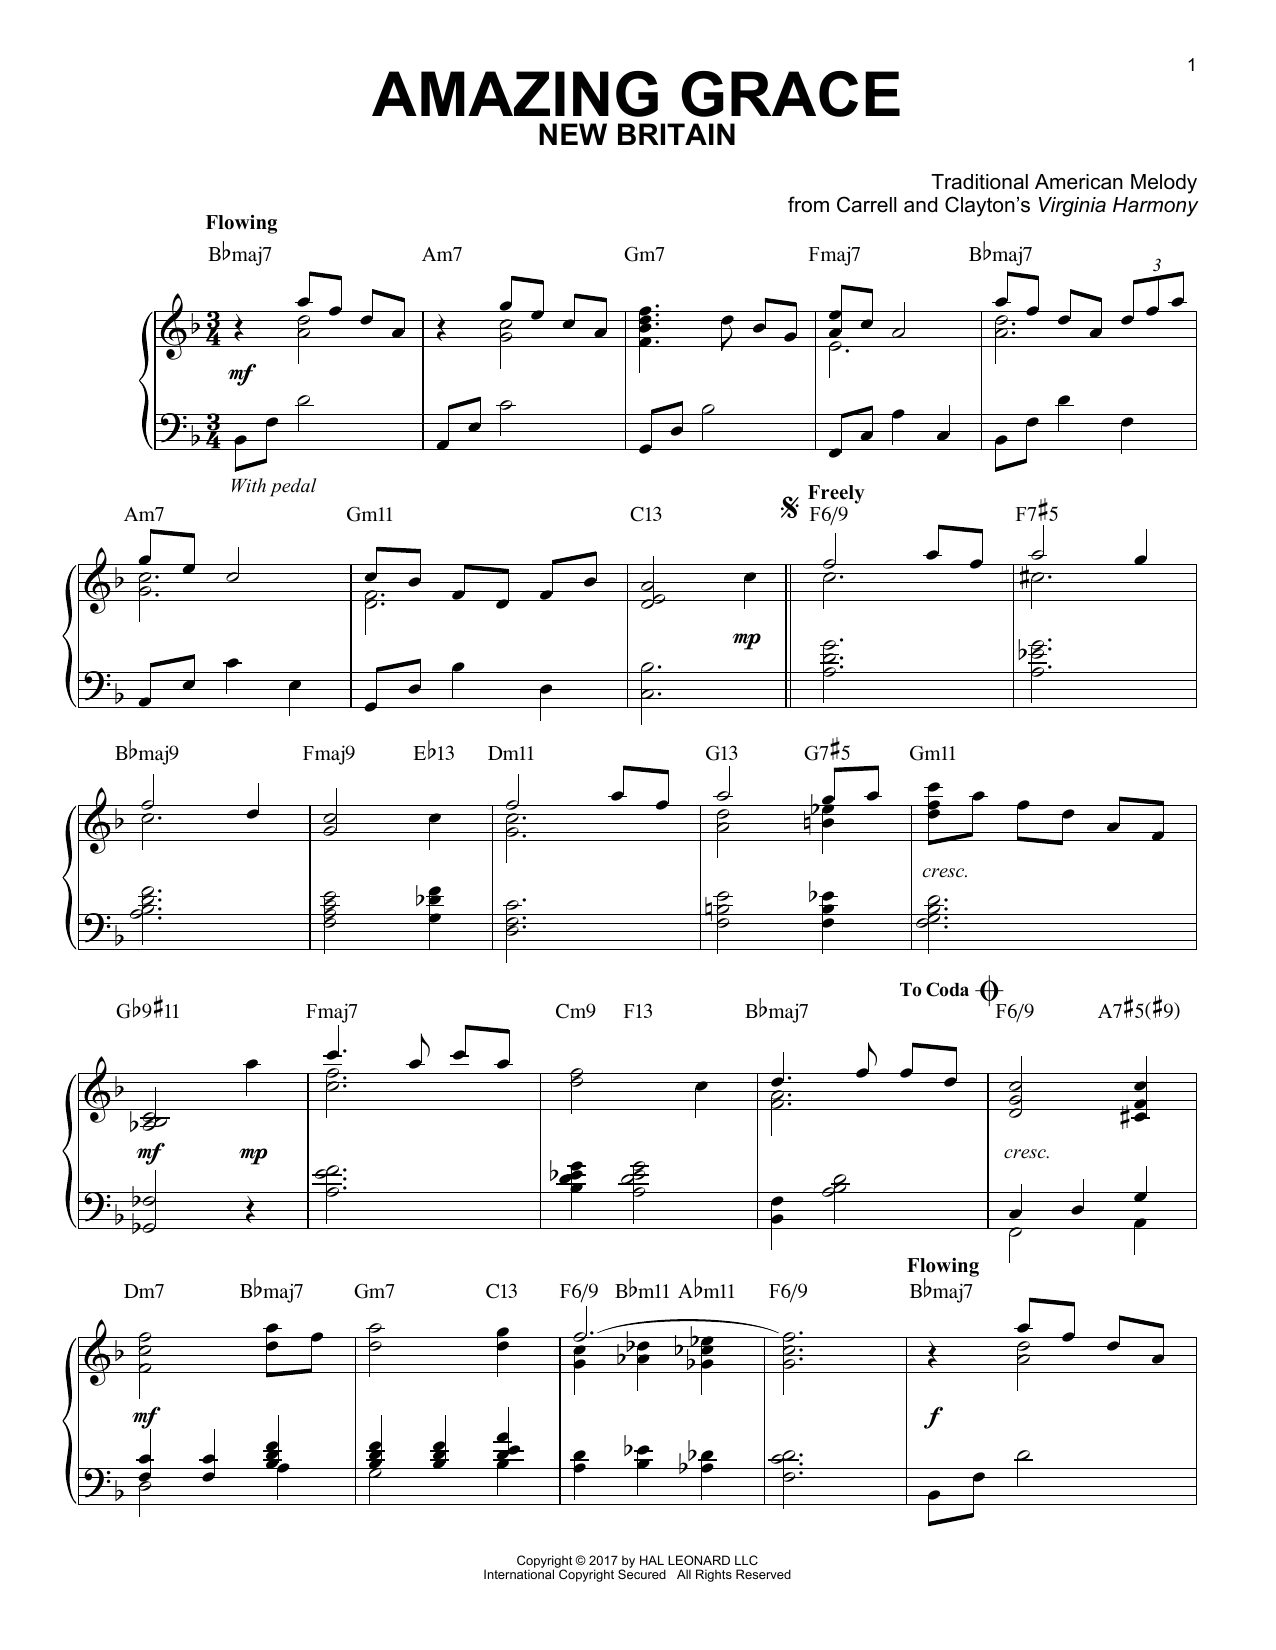 Traditional American Melody Amazing Grace Jazz Version Sheet Music Download Pdf Score